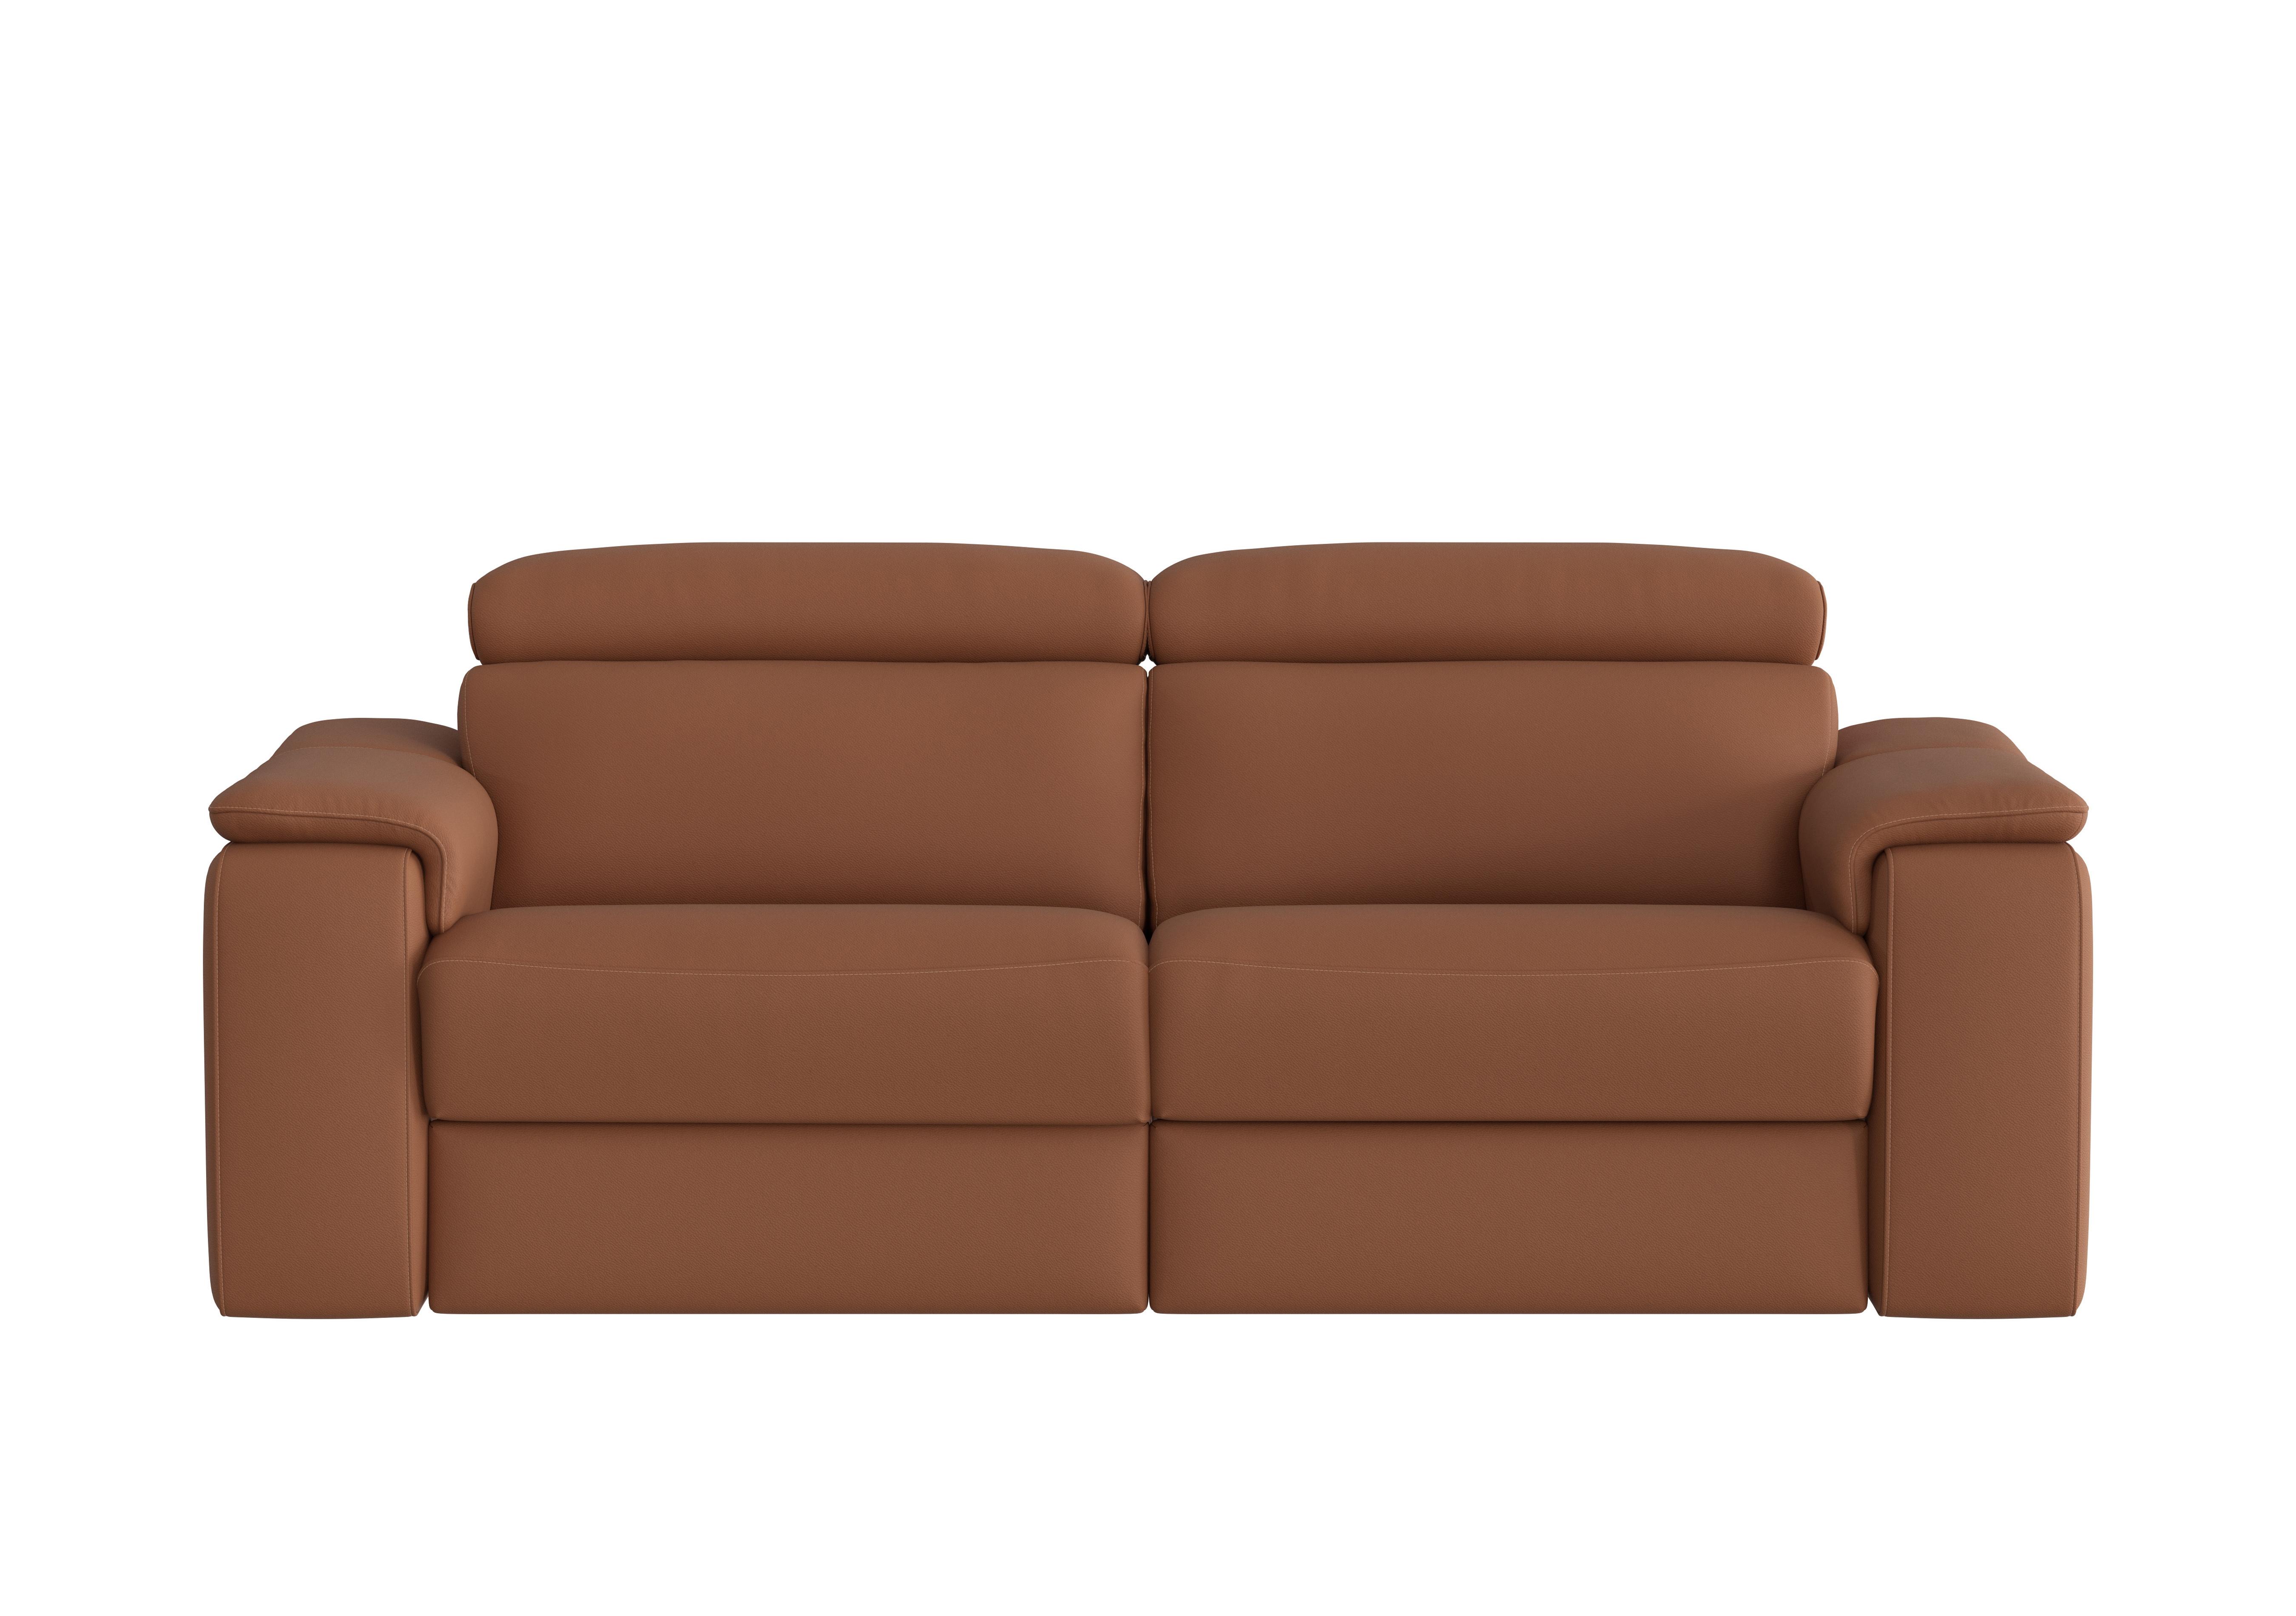 Davide 3 Seater Leather Sofa in 363 Torello Cognac on Furniture Village